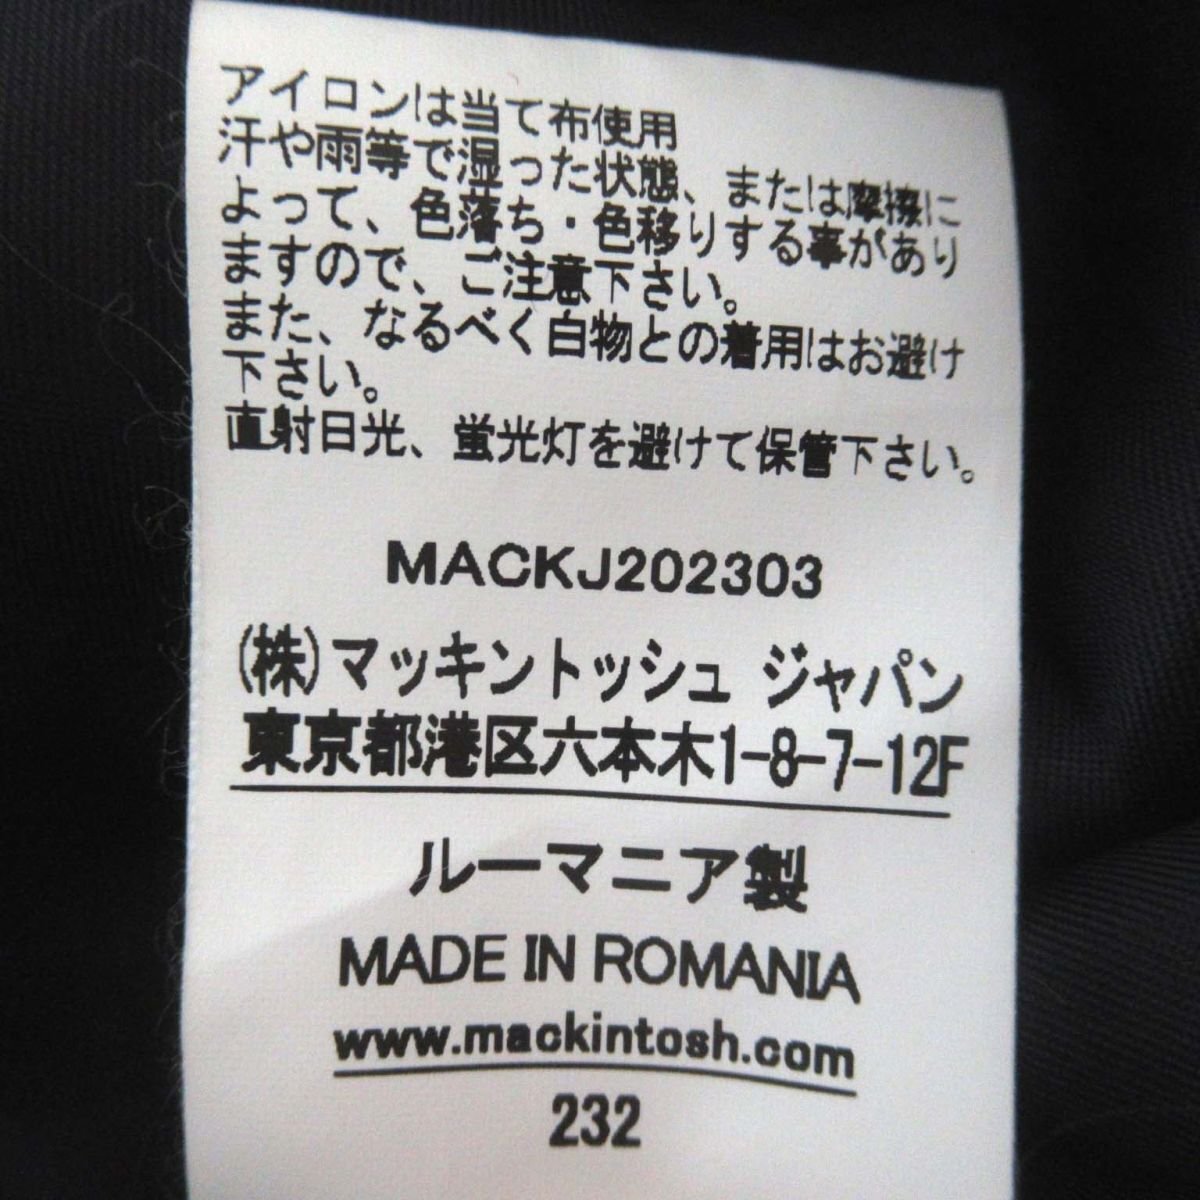  прекрасный товар 23AW MACKINTOSH Macintosh NEW HUMBIE LONG рукоятка Be свет вес melt n длинное пальто L232MO1132FL2K 4 темно-синий 